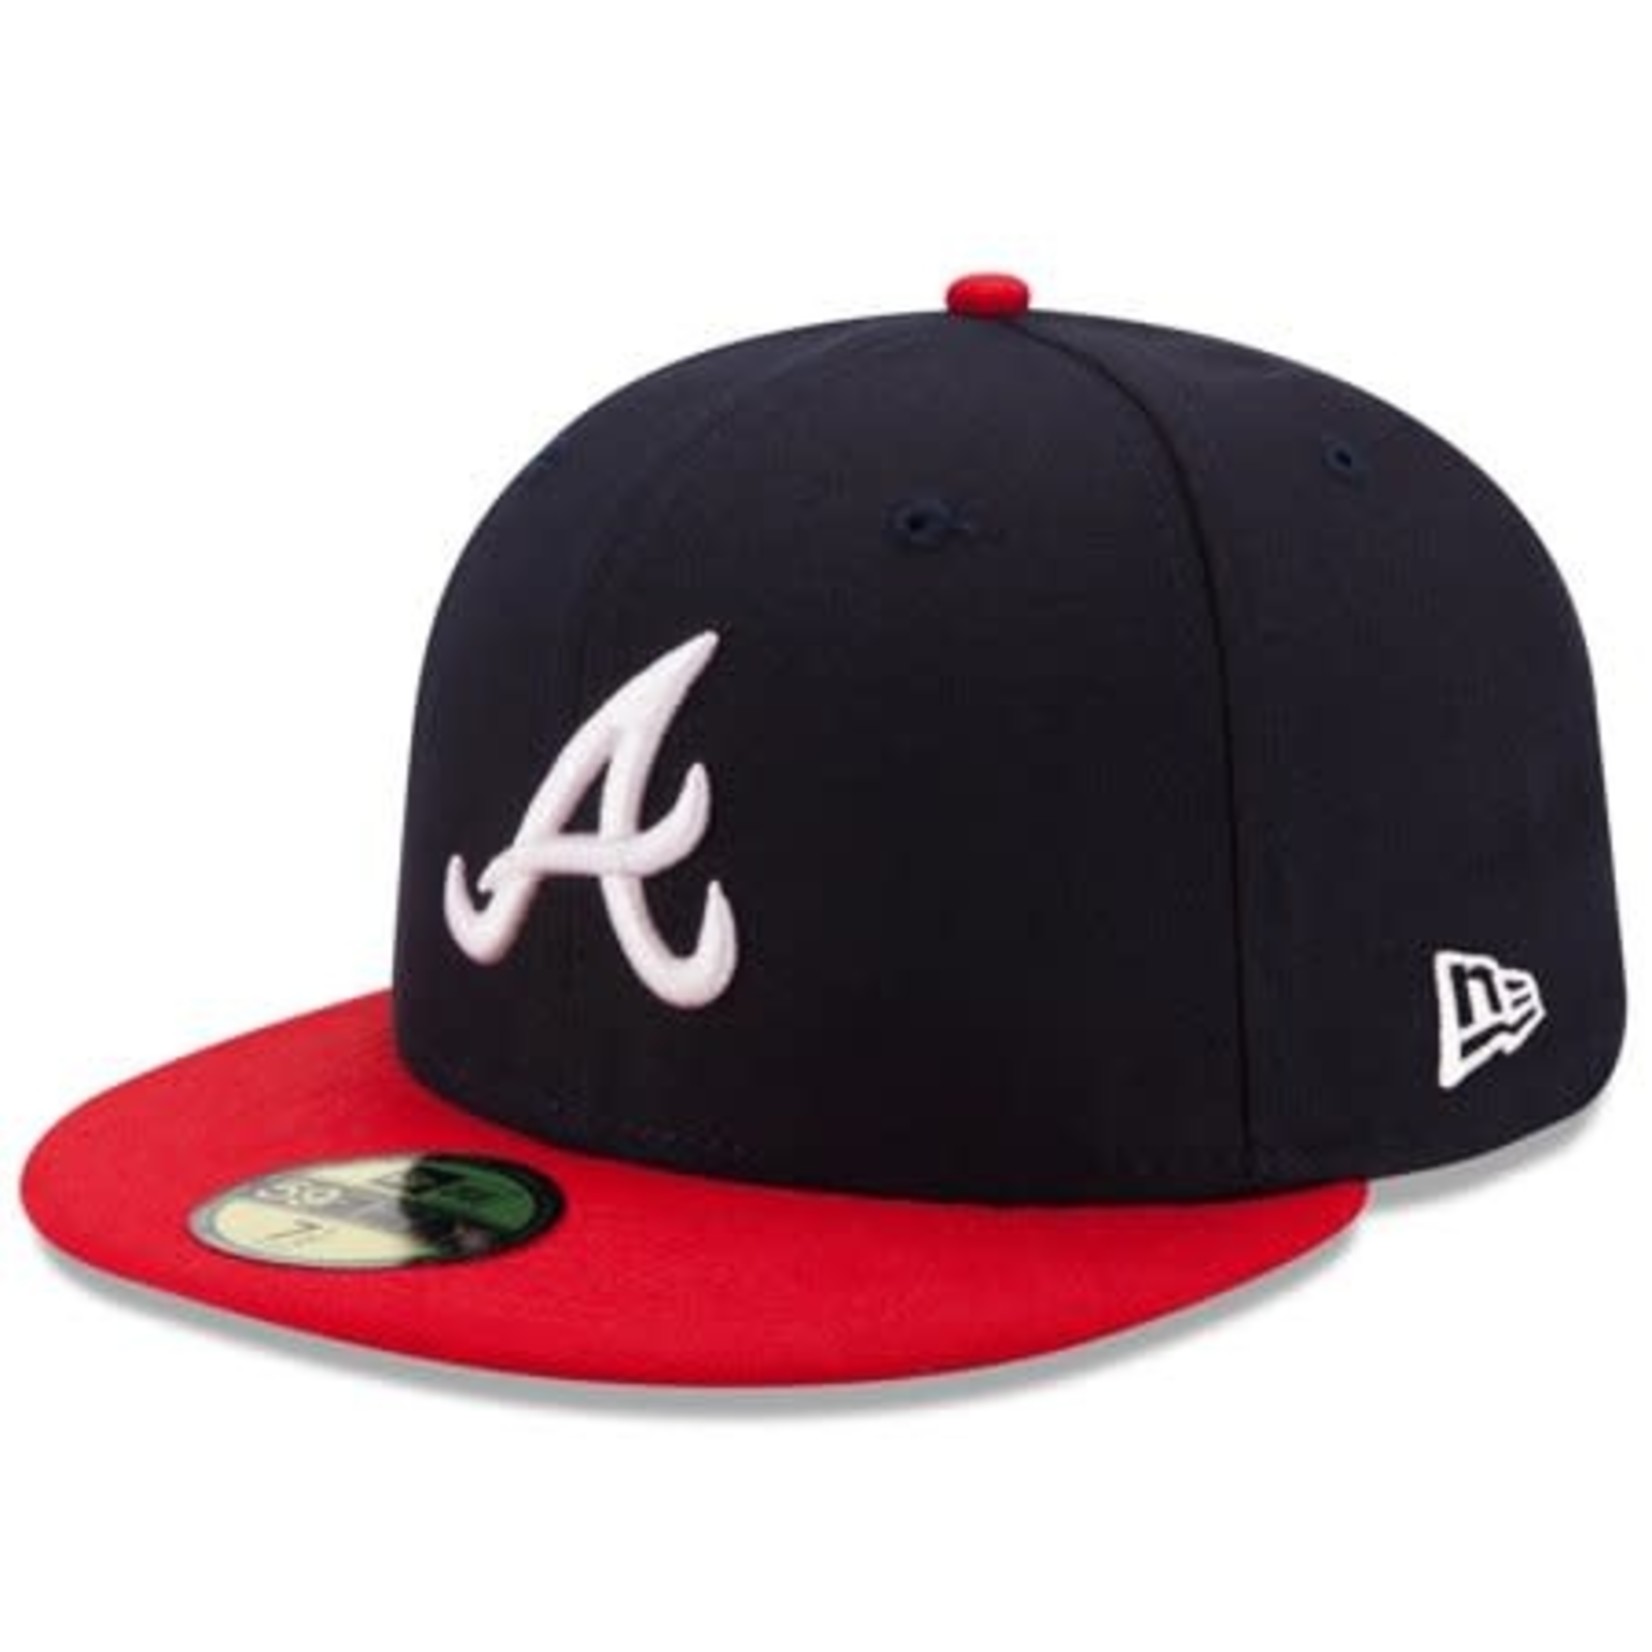 New Era New Era Atlanta Braves Authentic Collection 59FIFTY Cap